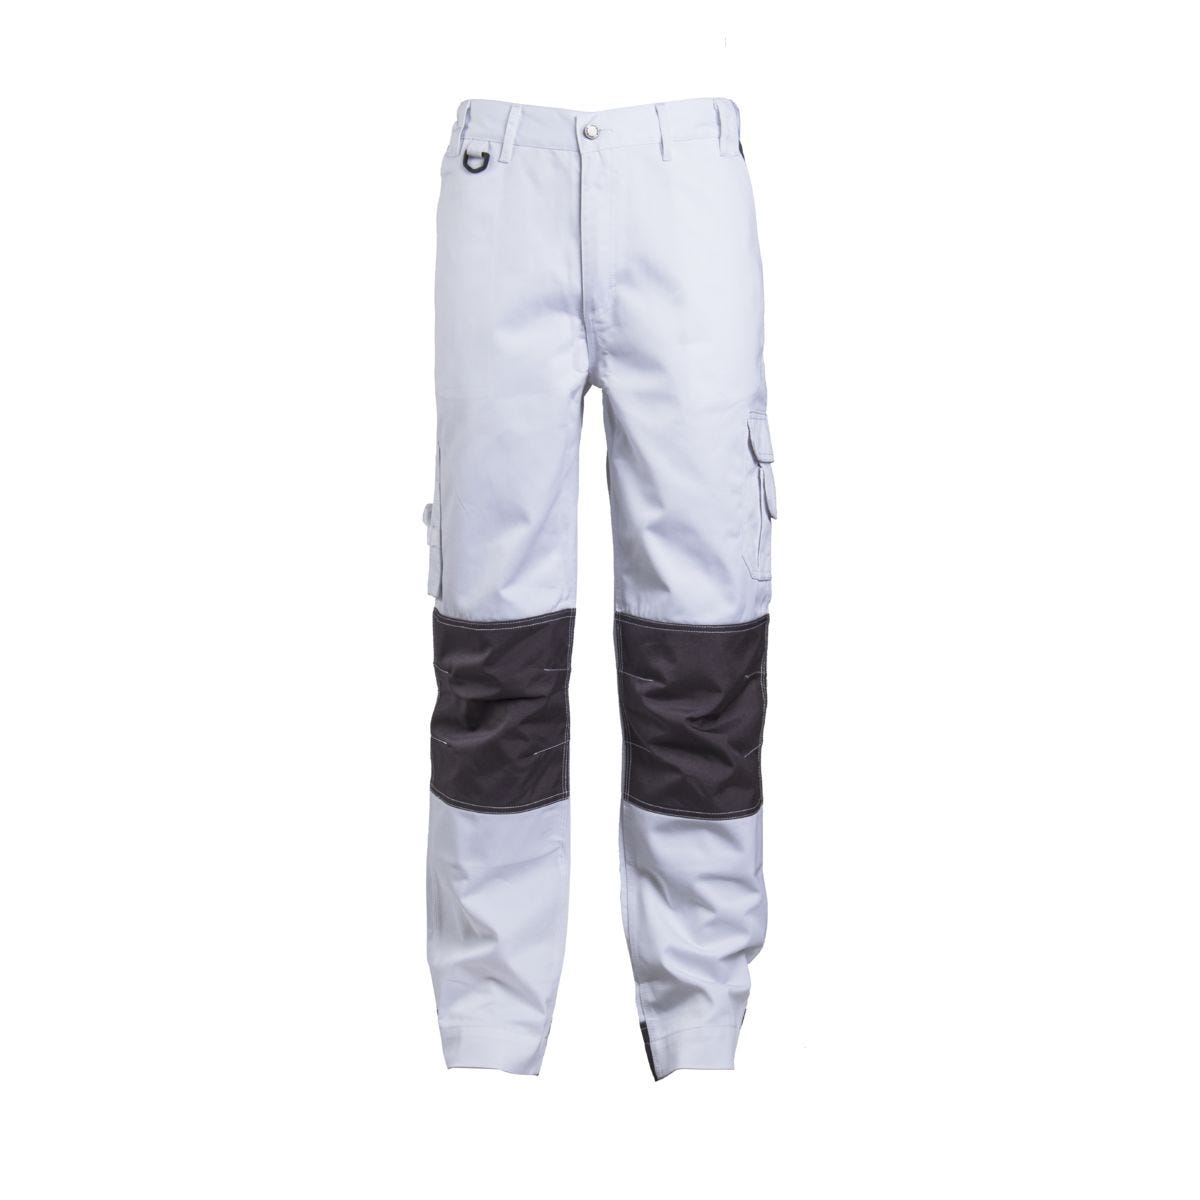 Pantalon CLASS blanc - COVERGUARD - Taille S 0